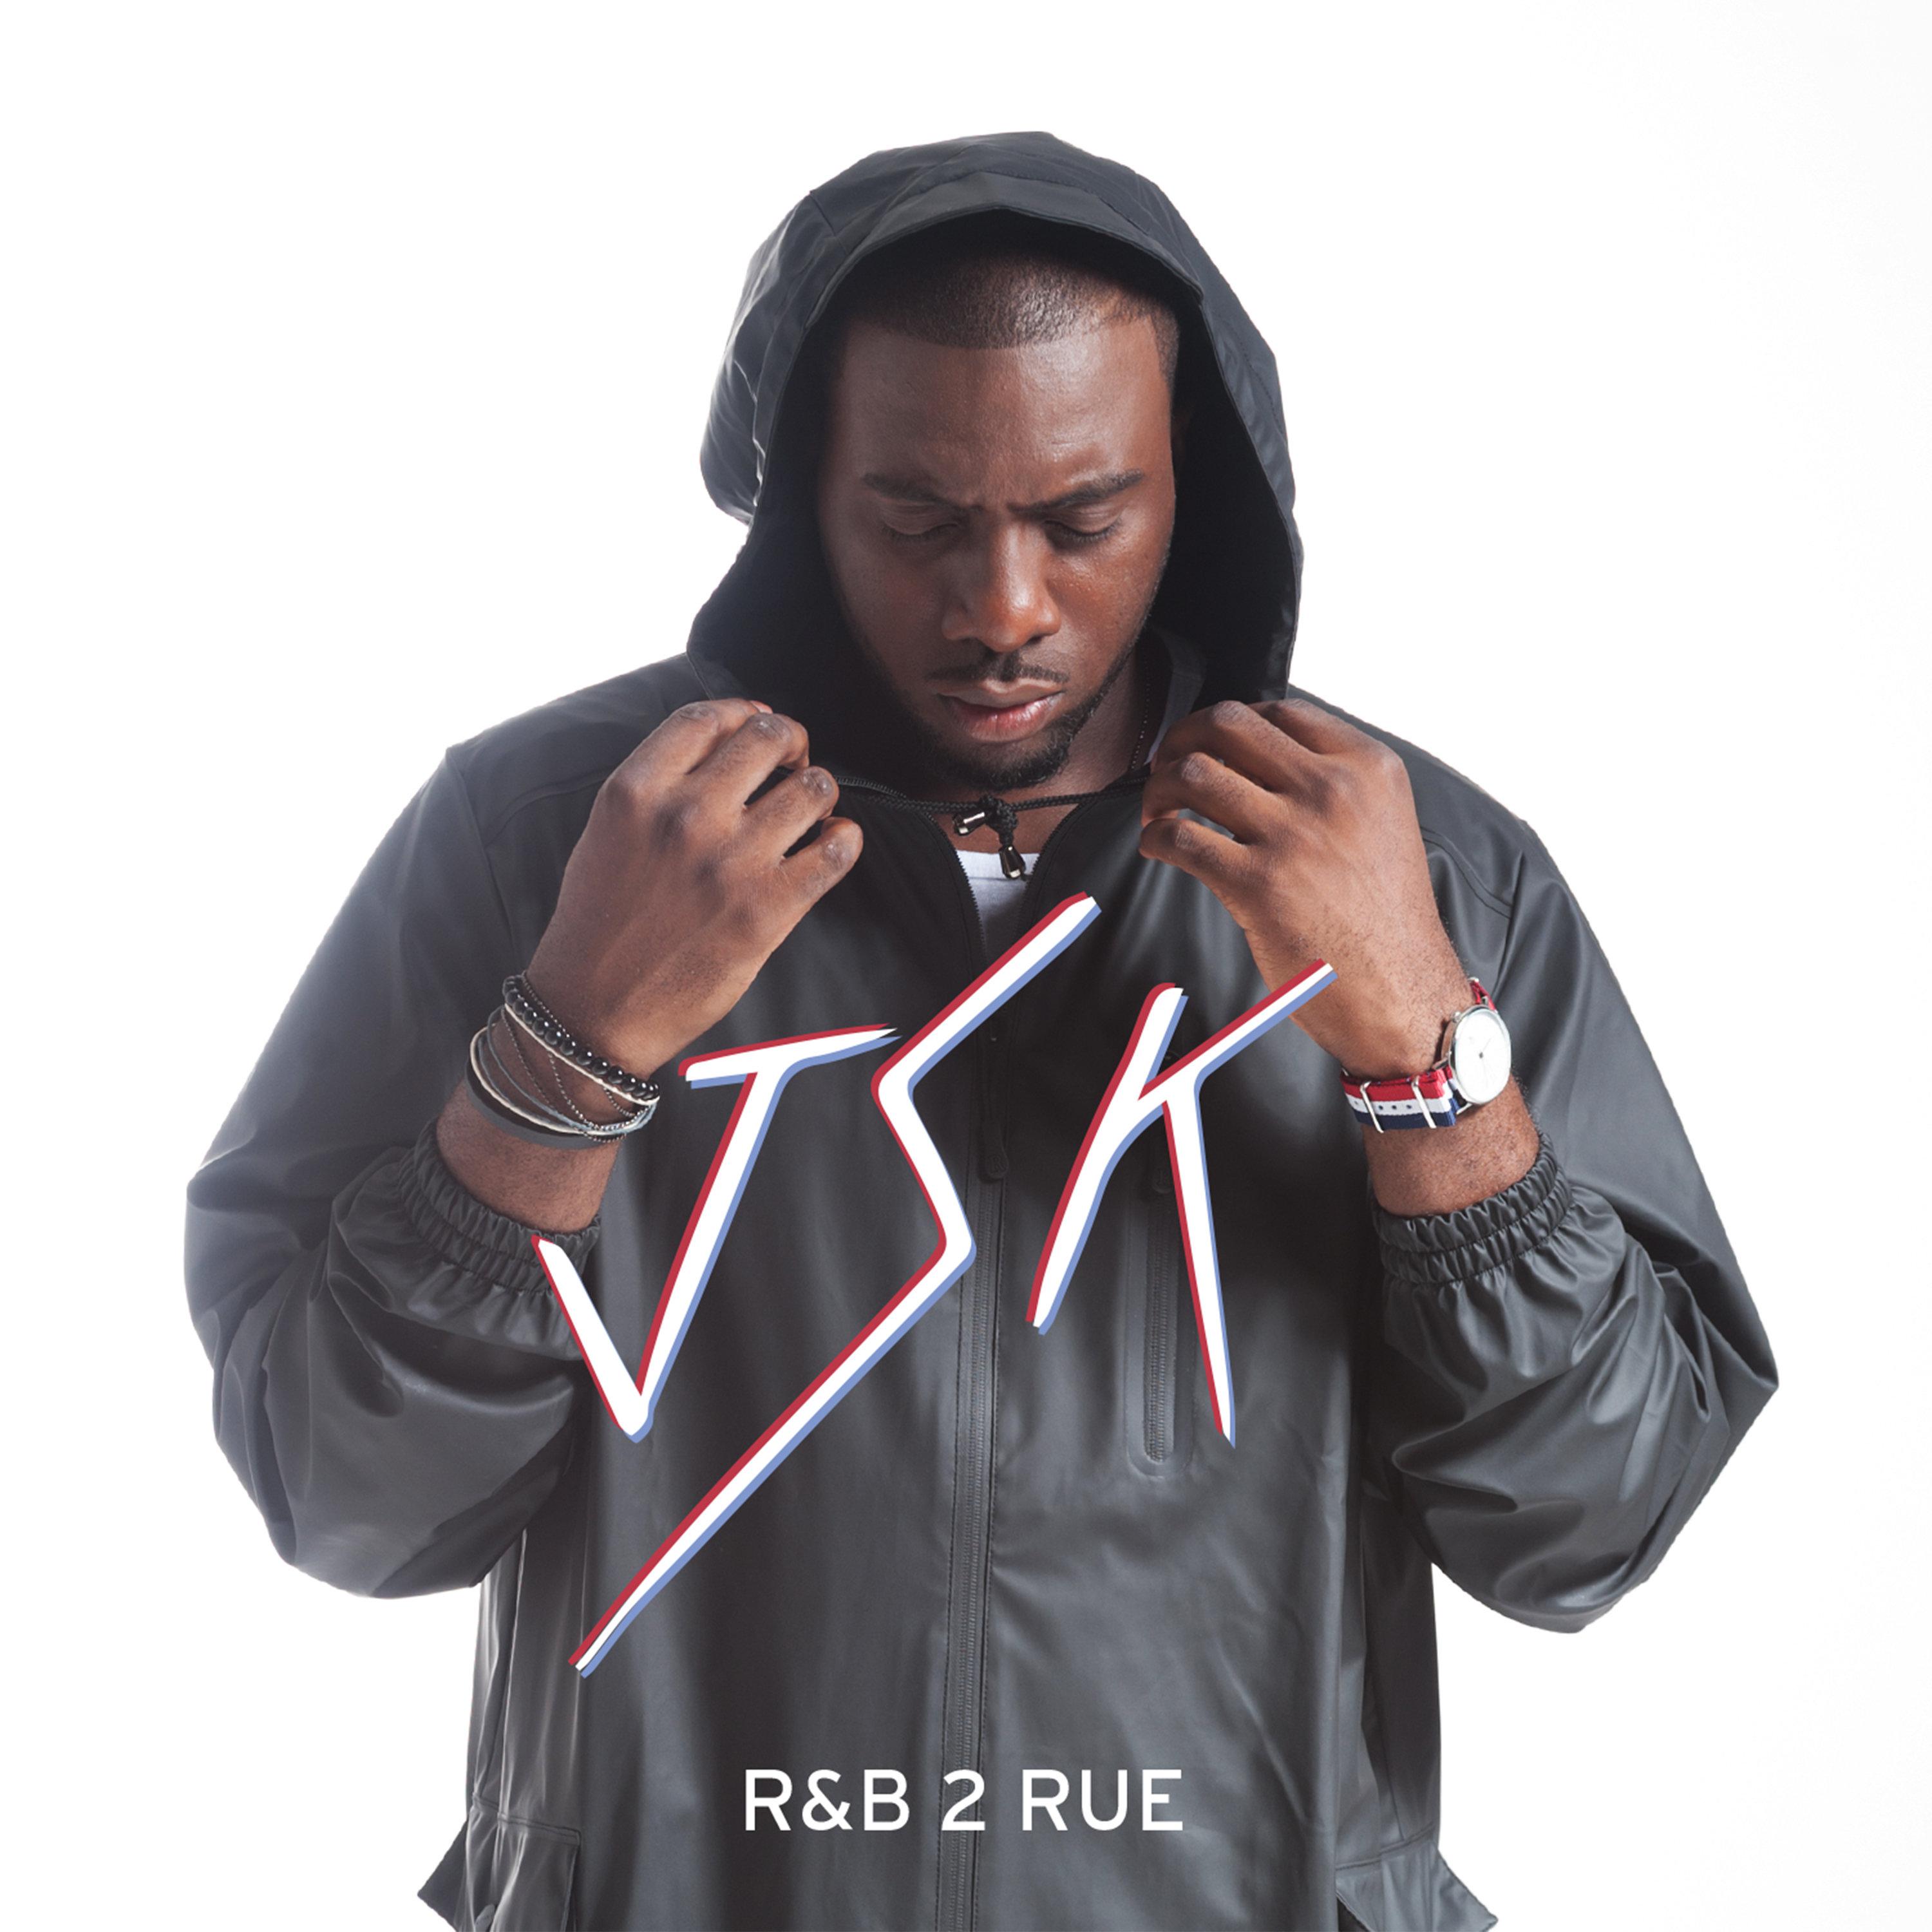 R&B 2 rue - Single